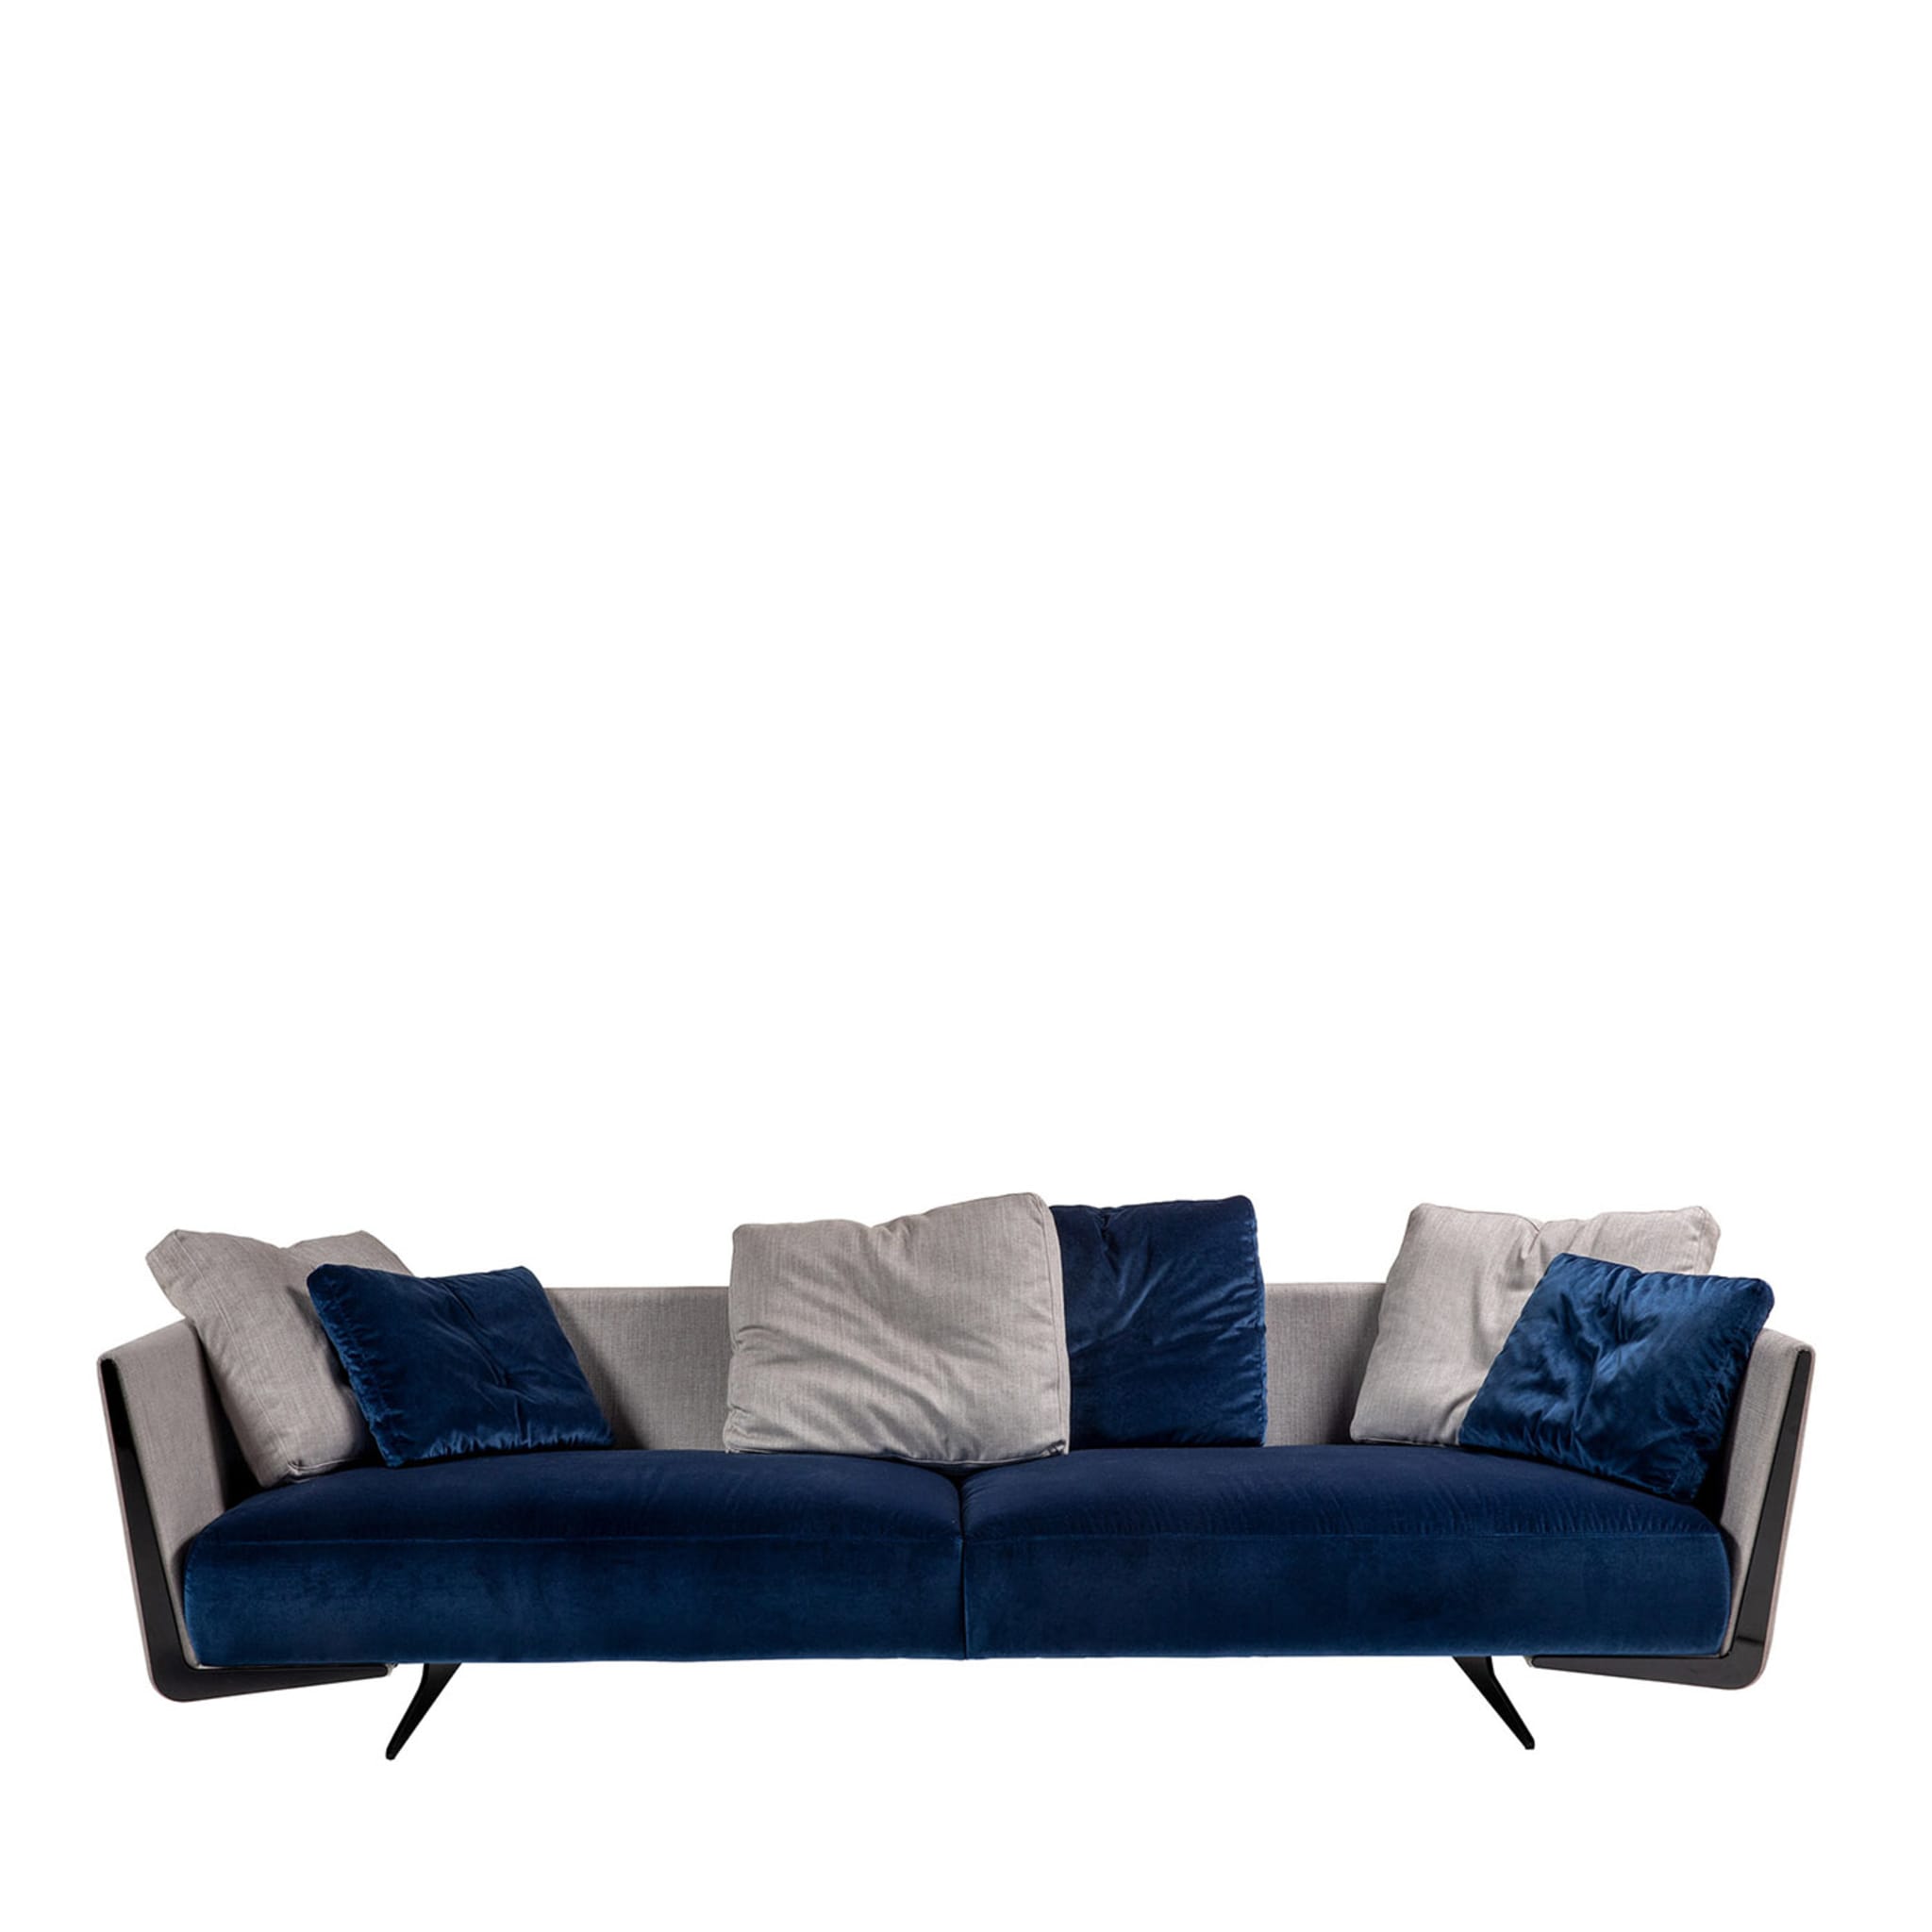 Blaues Bumerang-Sofa - Hauptansicht